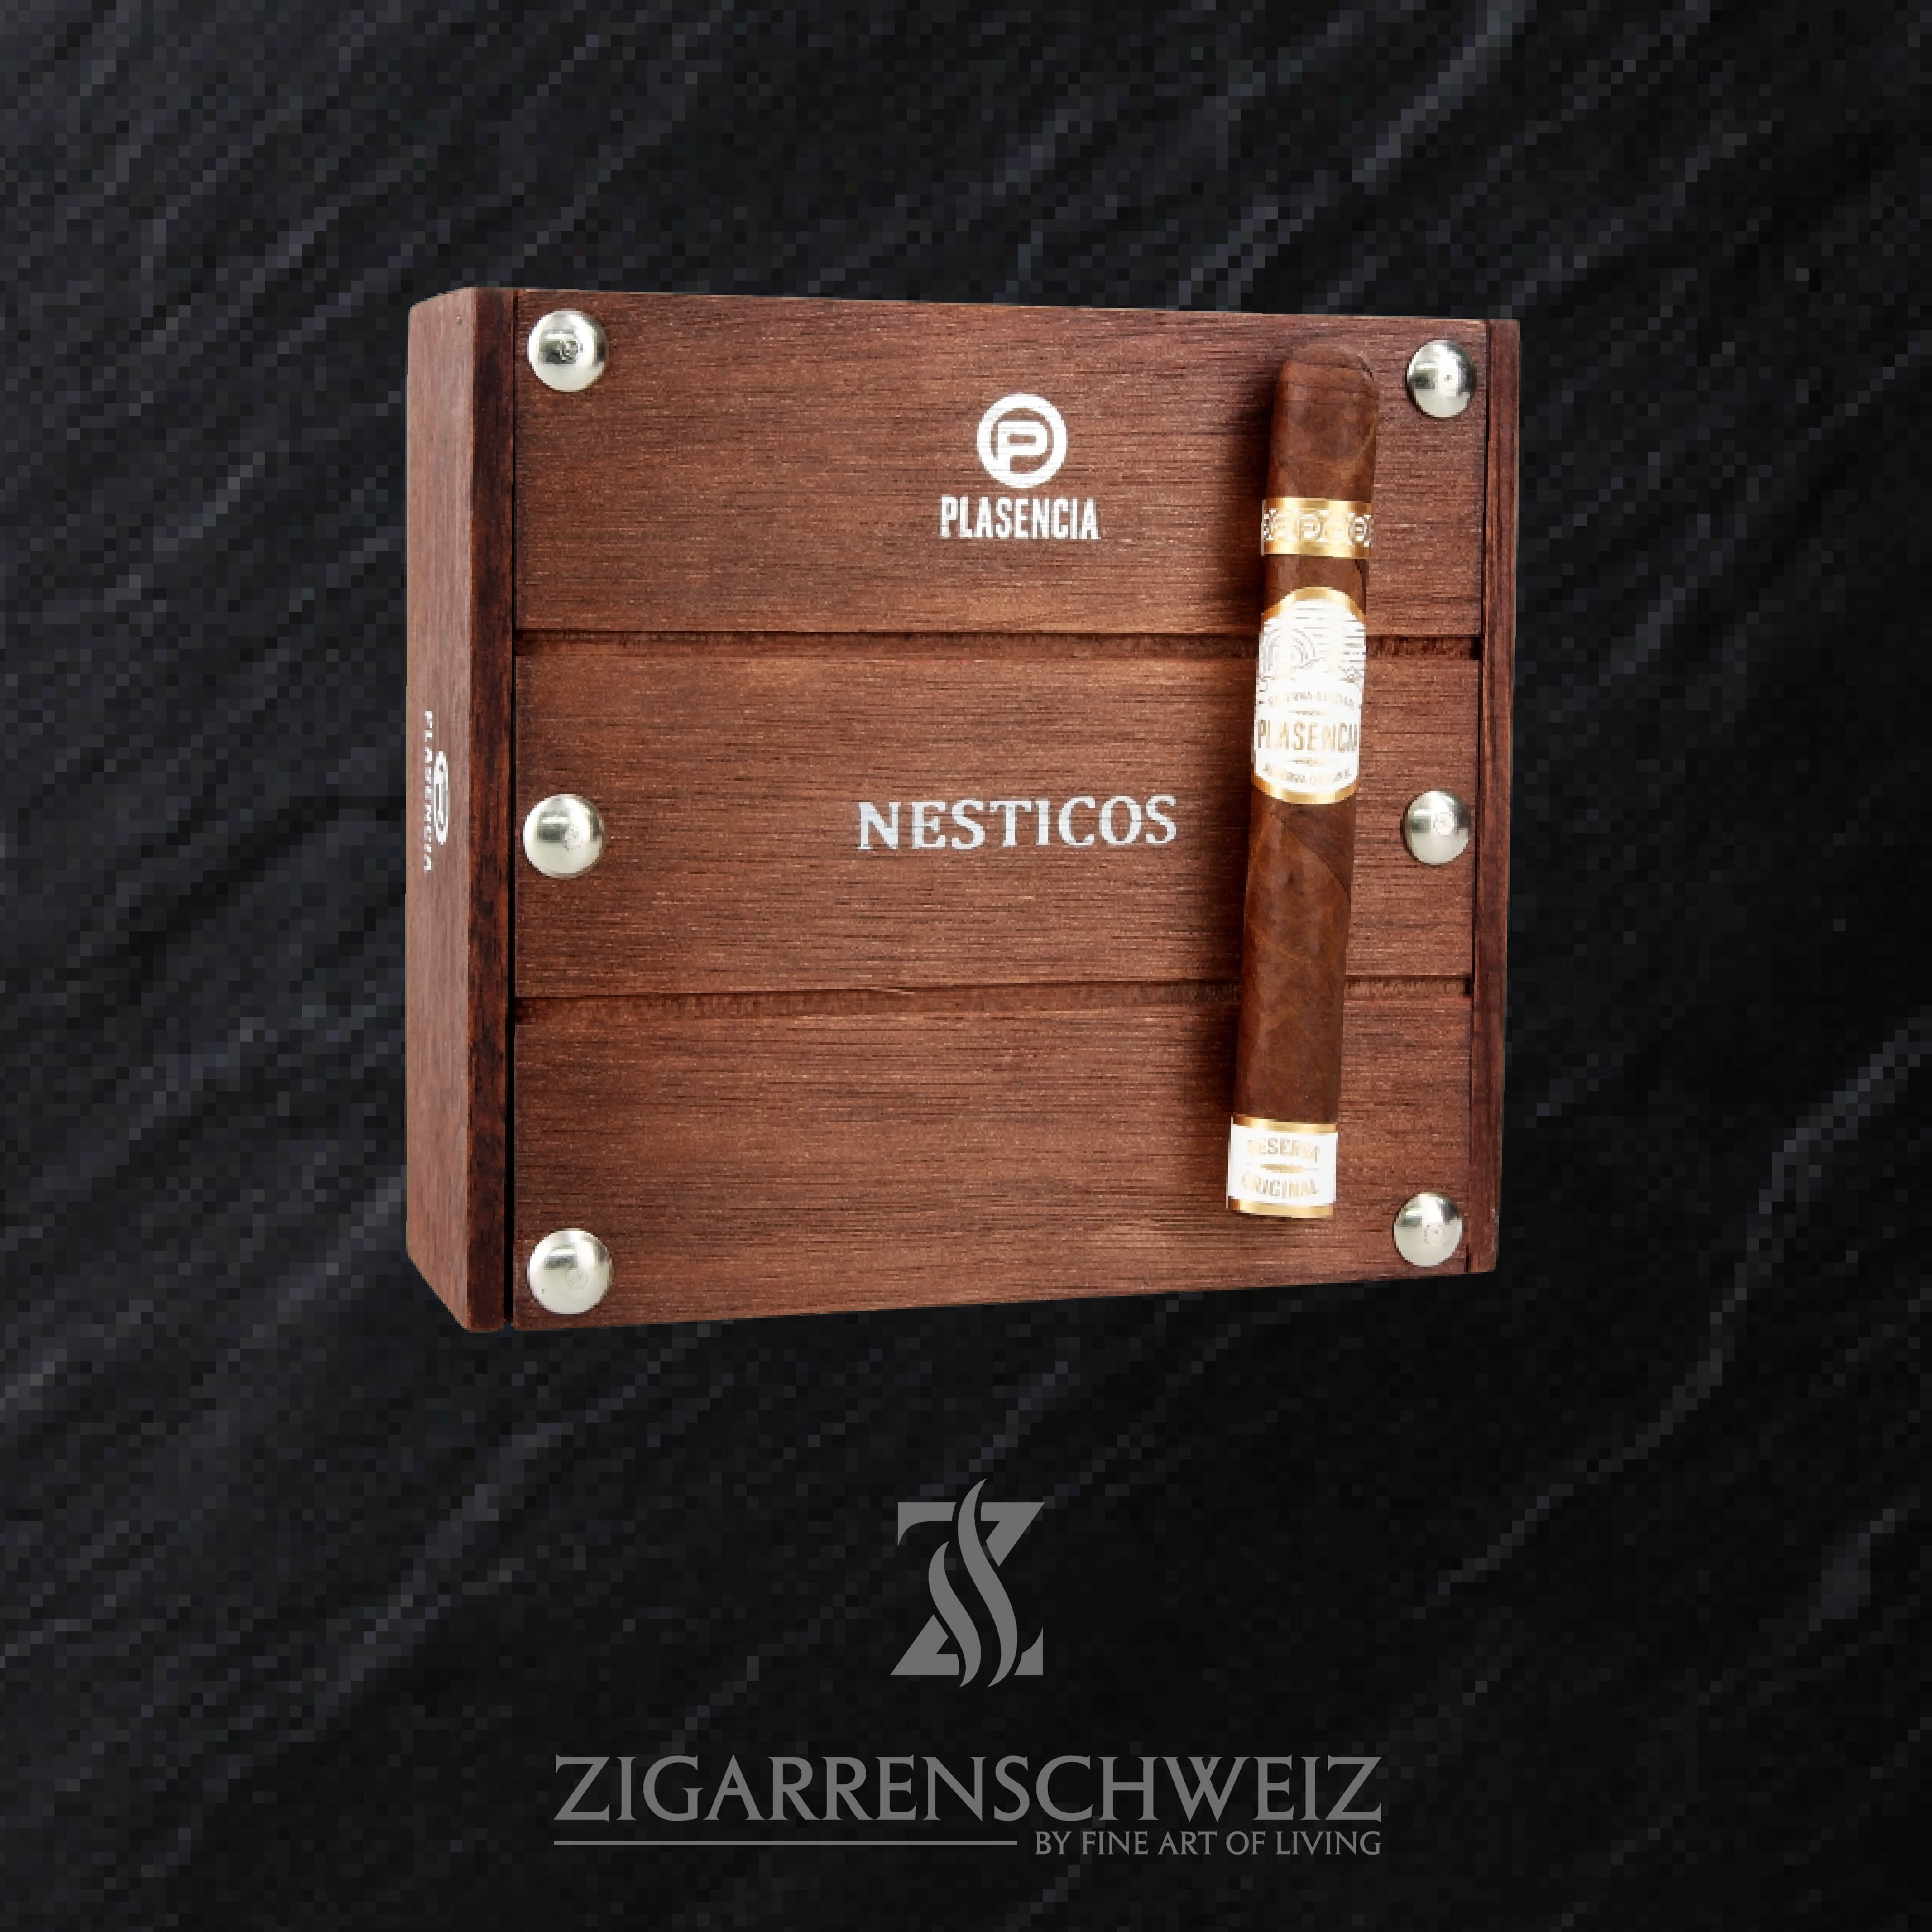 Plasencia Reserva Original Nesticos Zigarren Kiste geschlossen